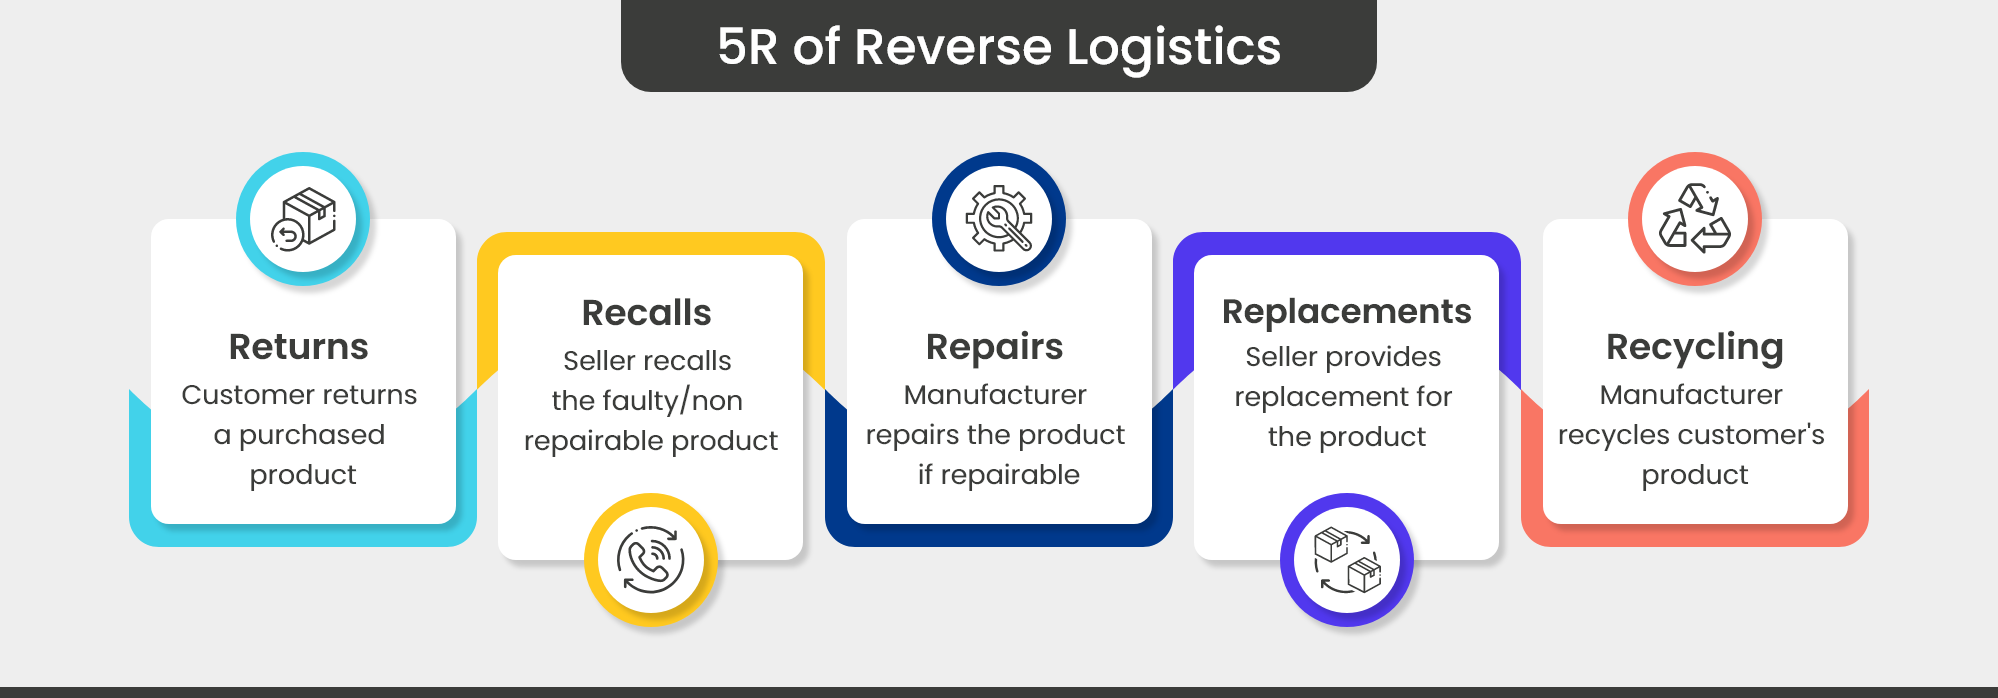 5R of reverse logistics process